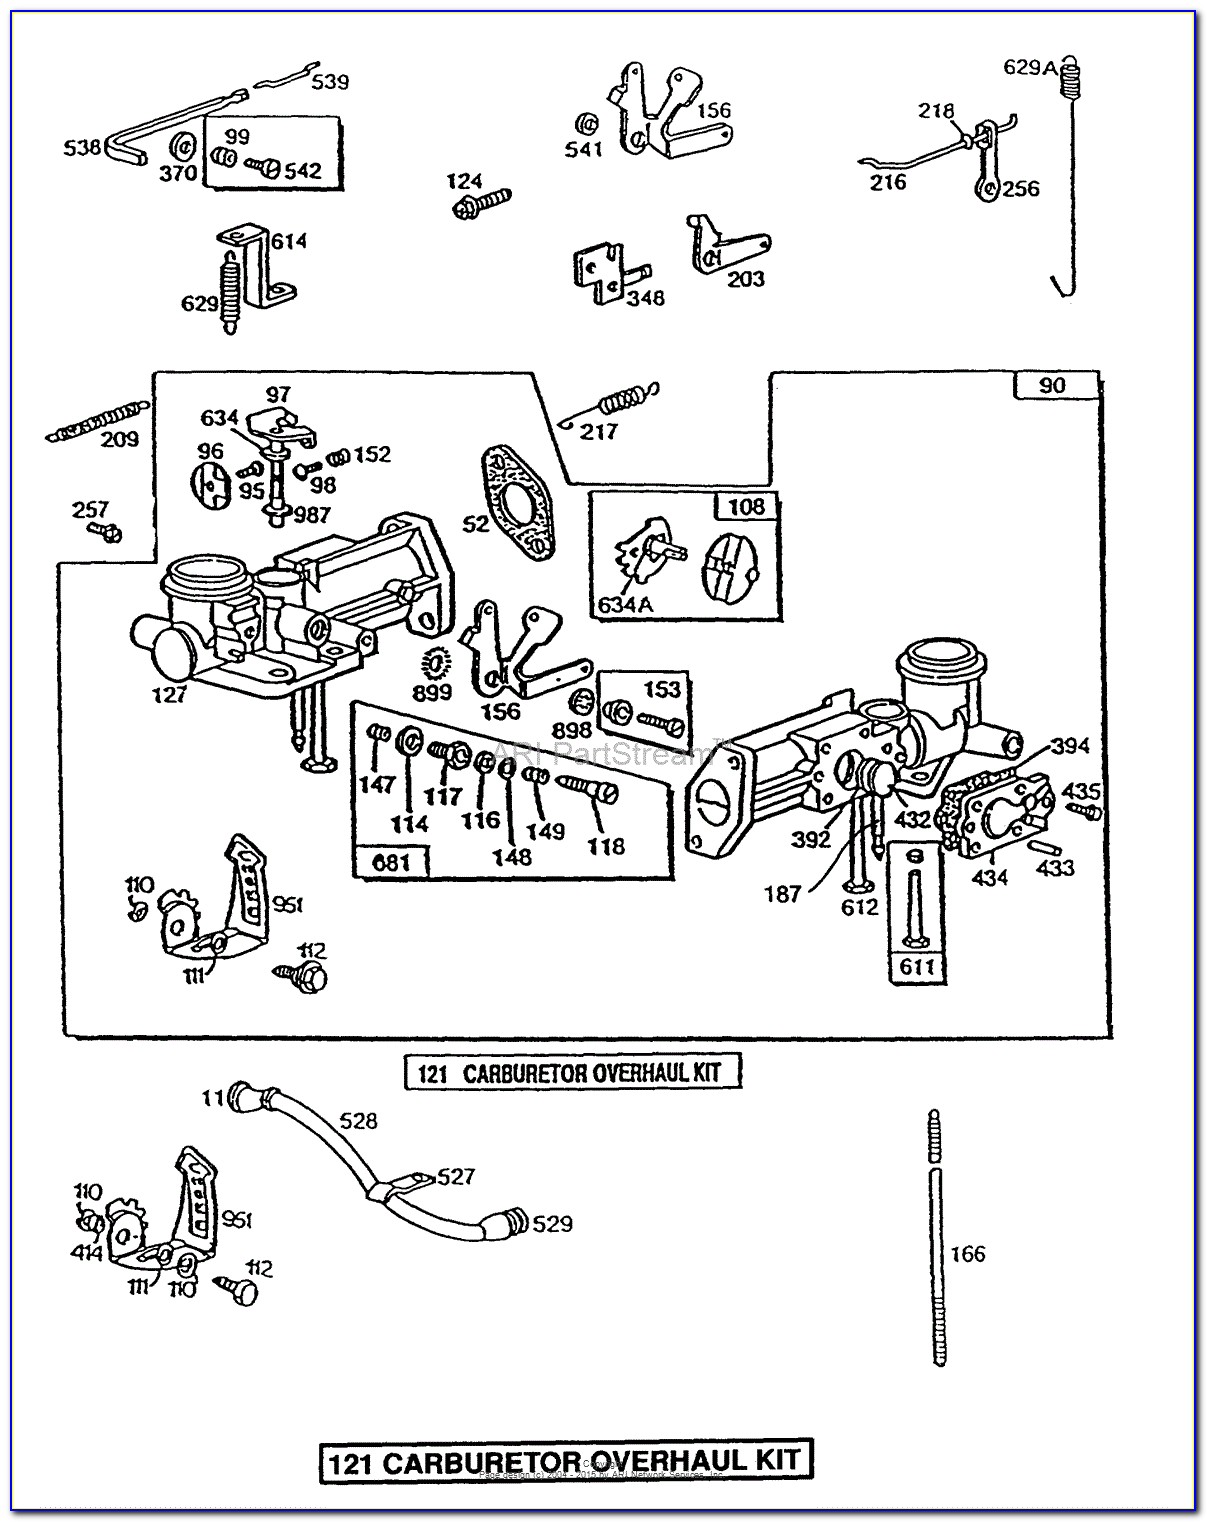 3.5 Hp Briggs And Stratton Carburetor Spring Diagram